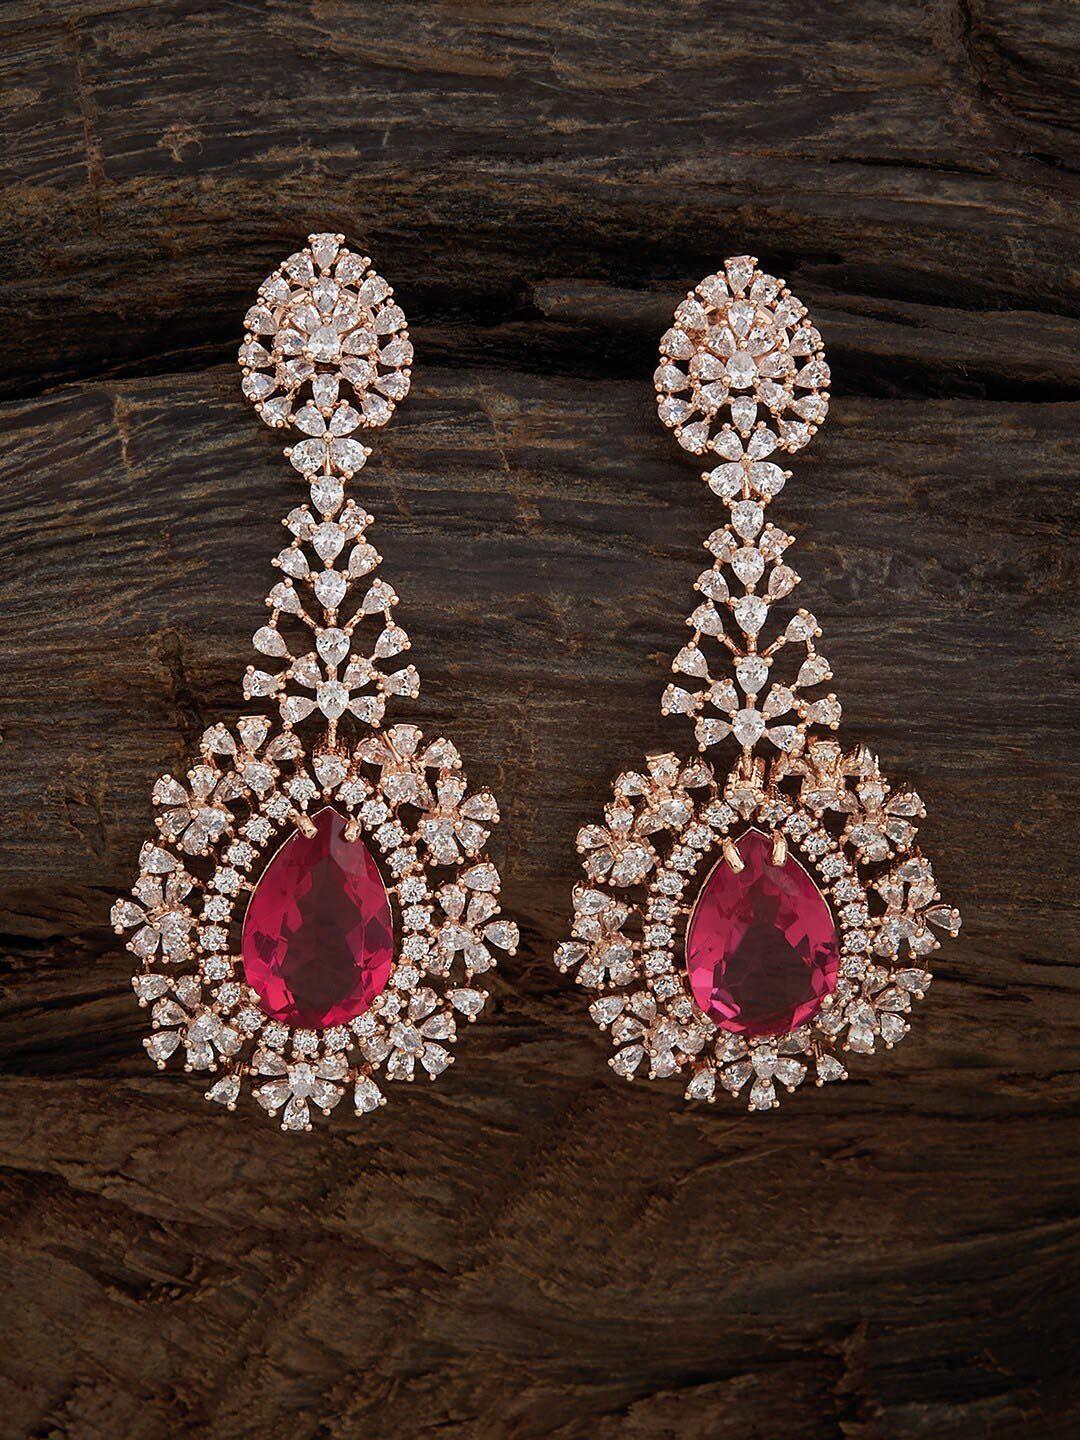 kushal's fashion jewellery rose gold plated cz studded teardrop shaped drop earrings